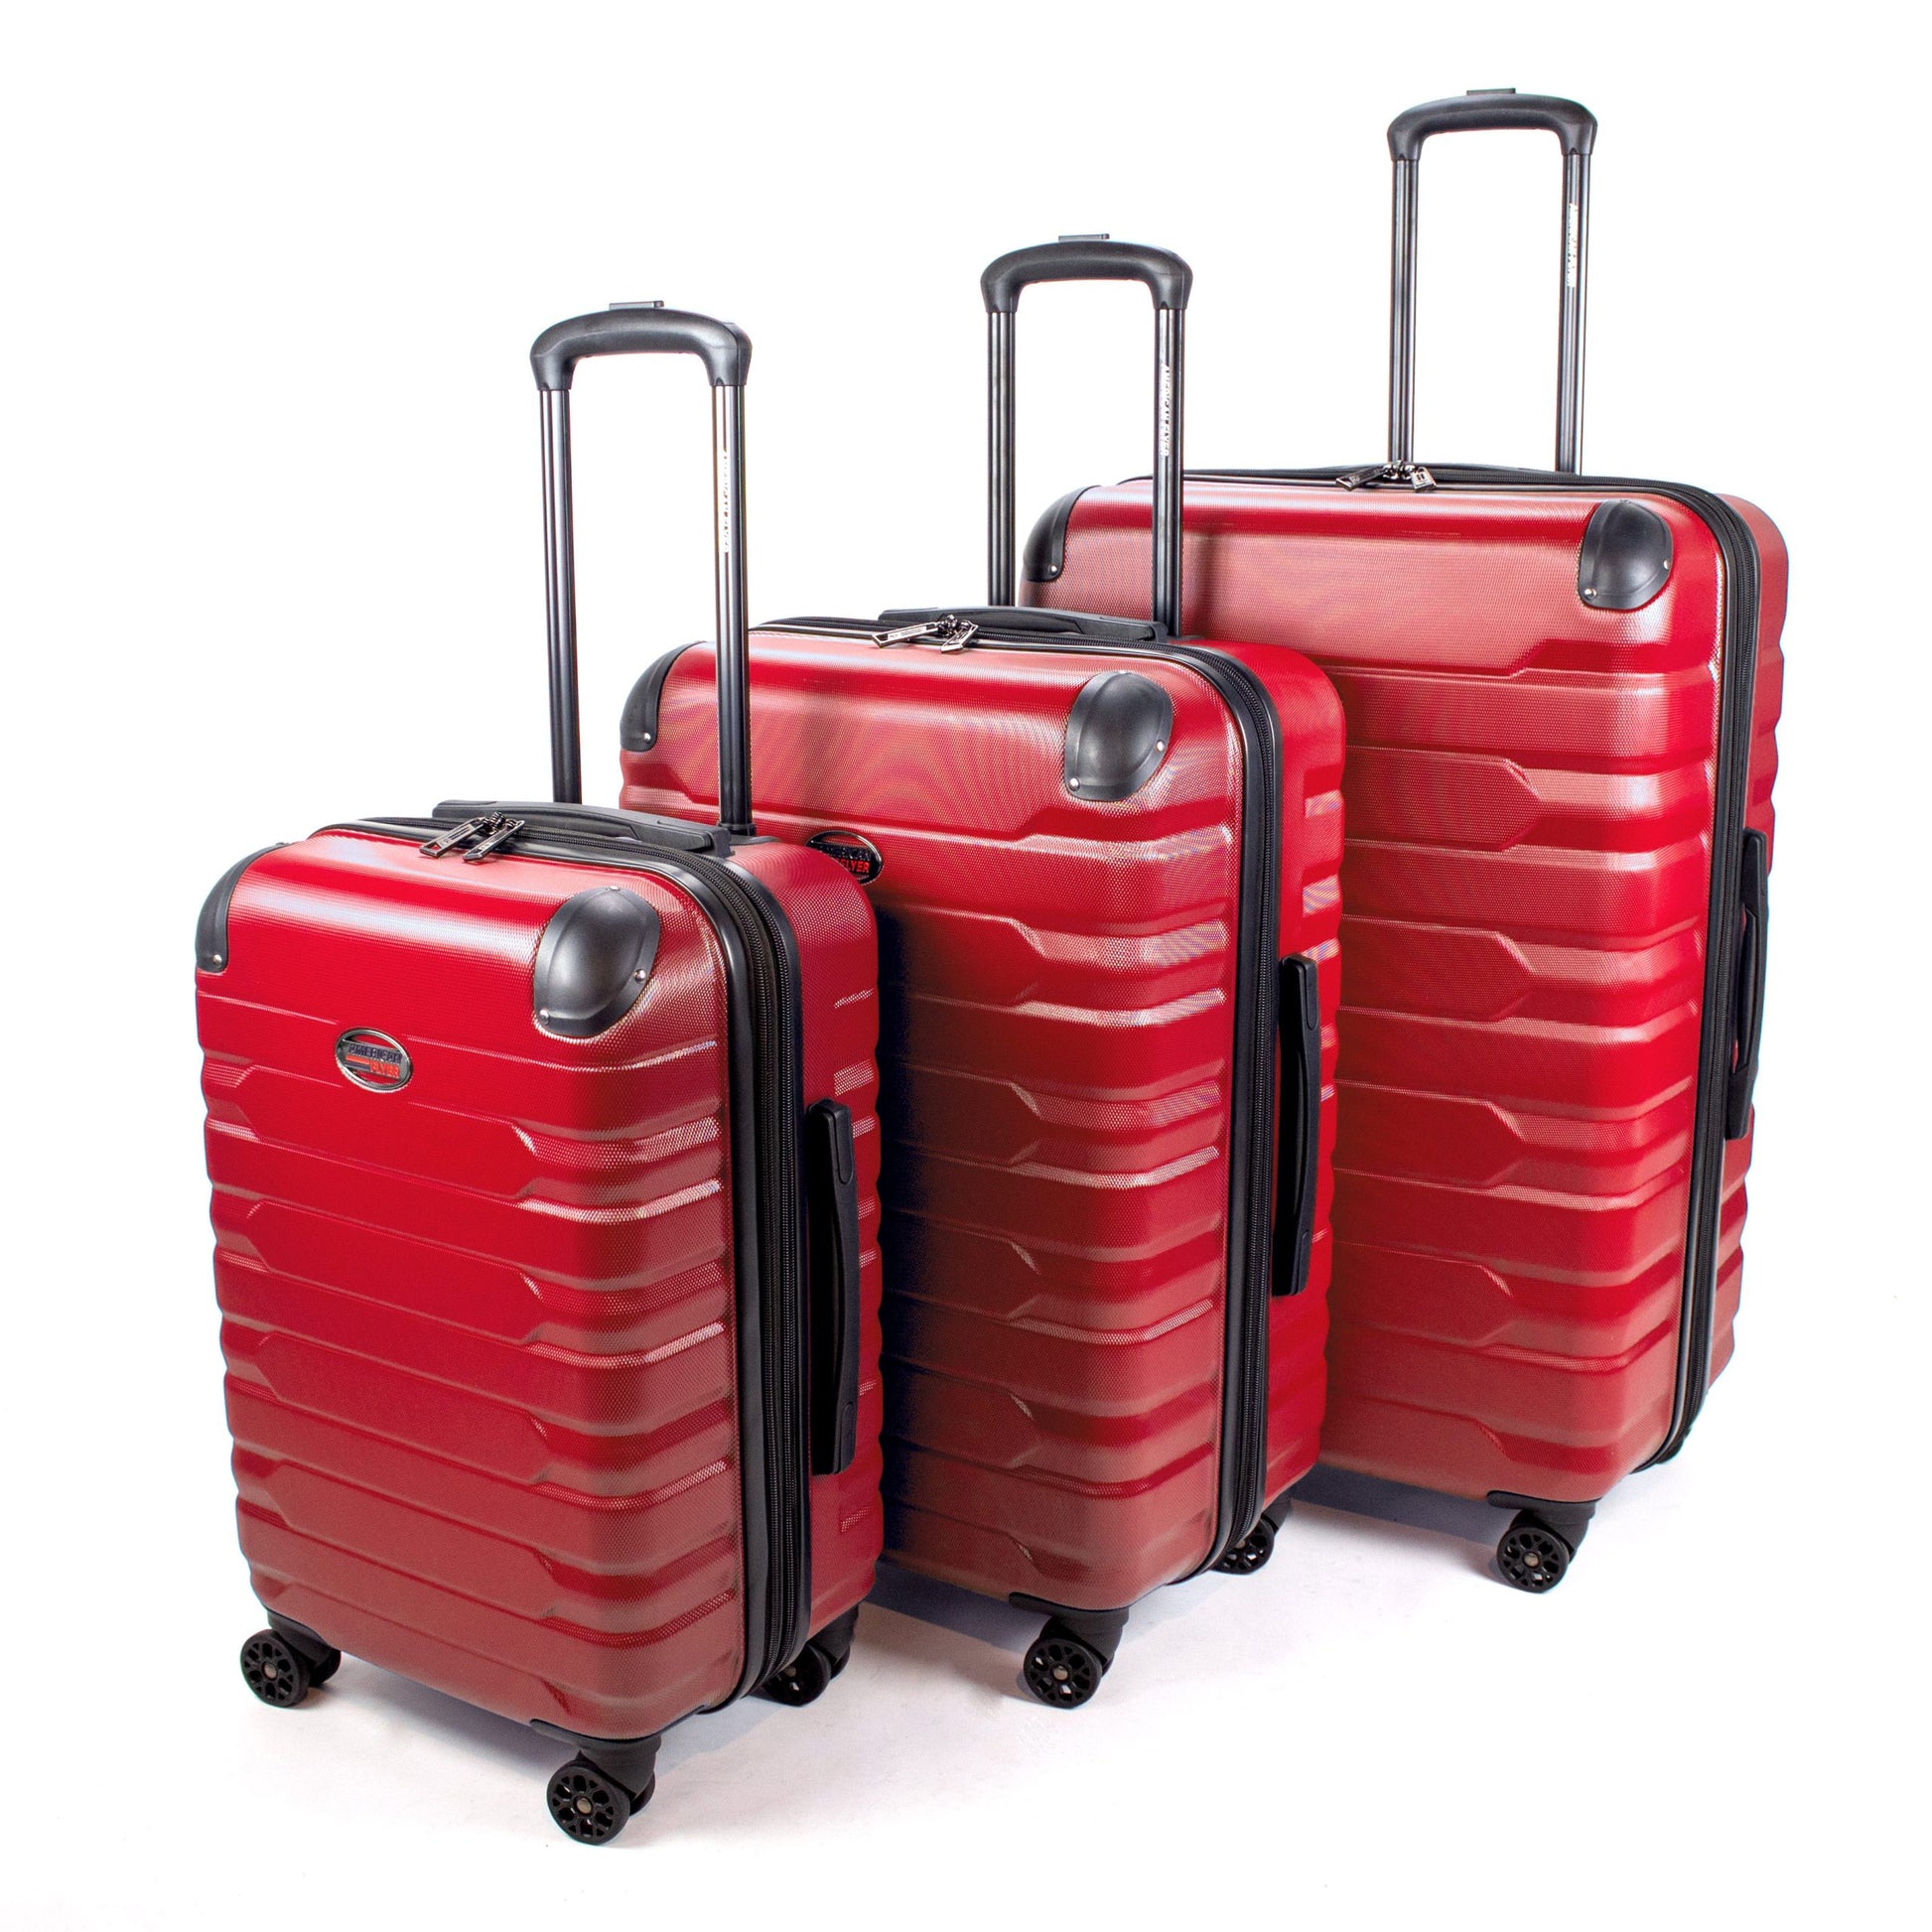 American Flyer Mina 3-Piece Hardside Luggage Set - 20516551